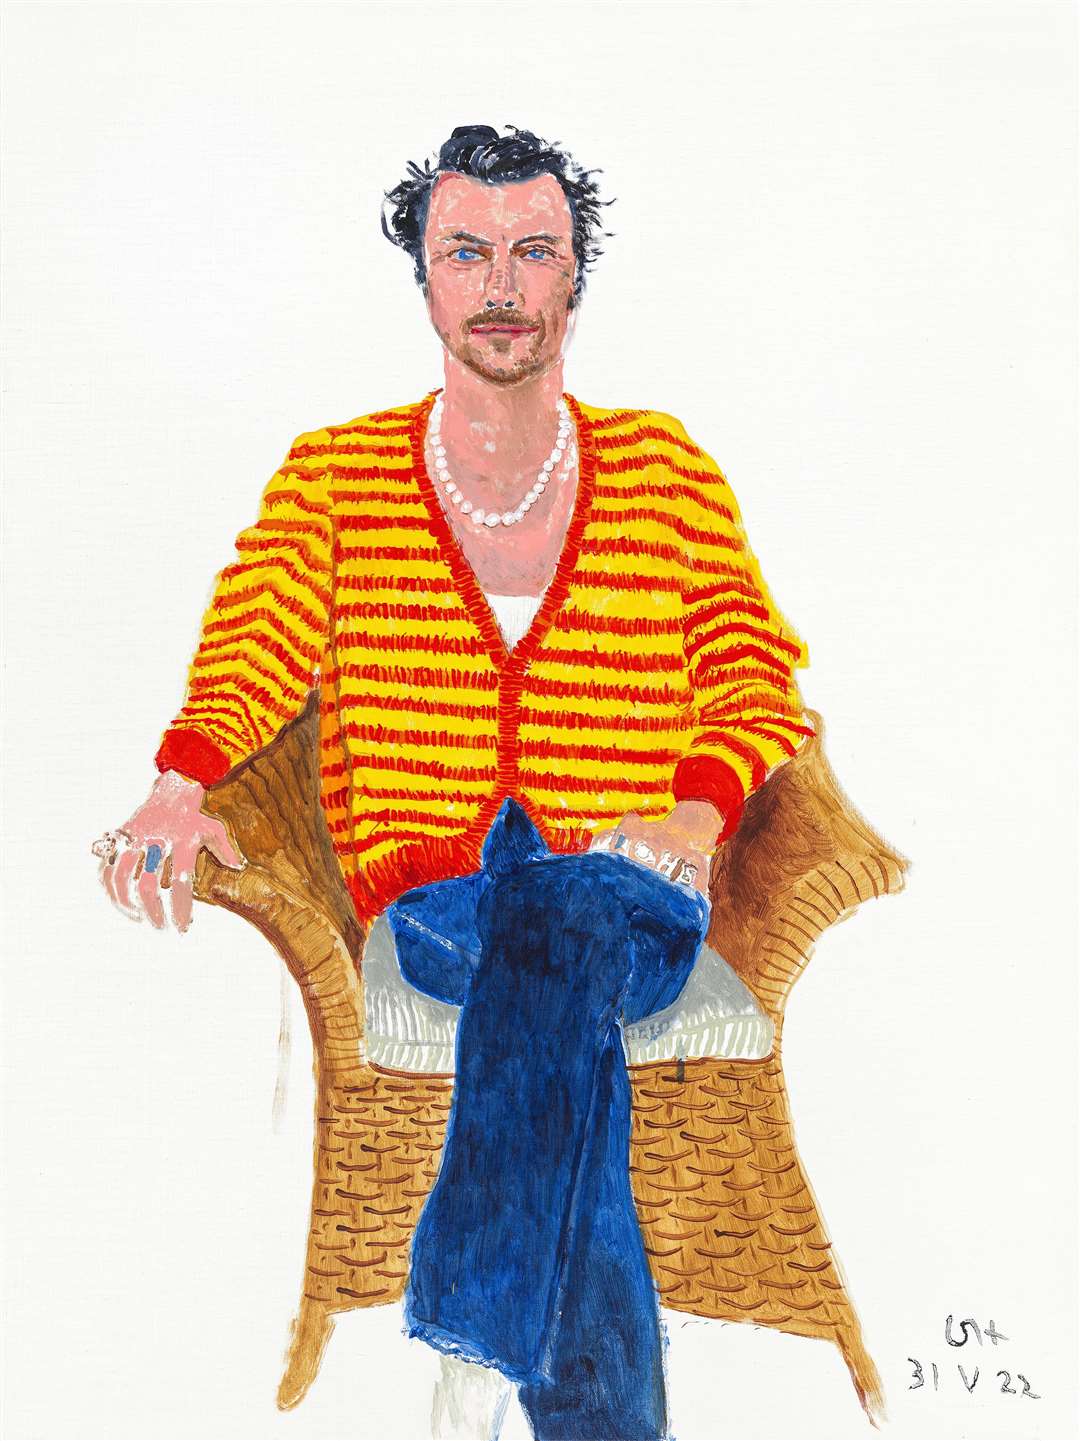 David Hockney’s portrait of Harry Styles will go on display at the National Portrait Gallery (Jonathan Wilkinson/David Hockney/PA)